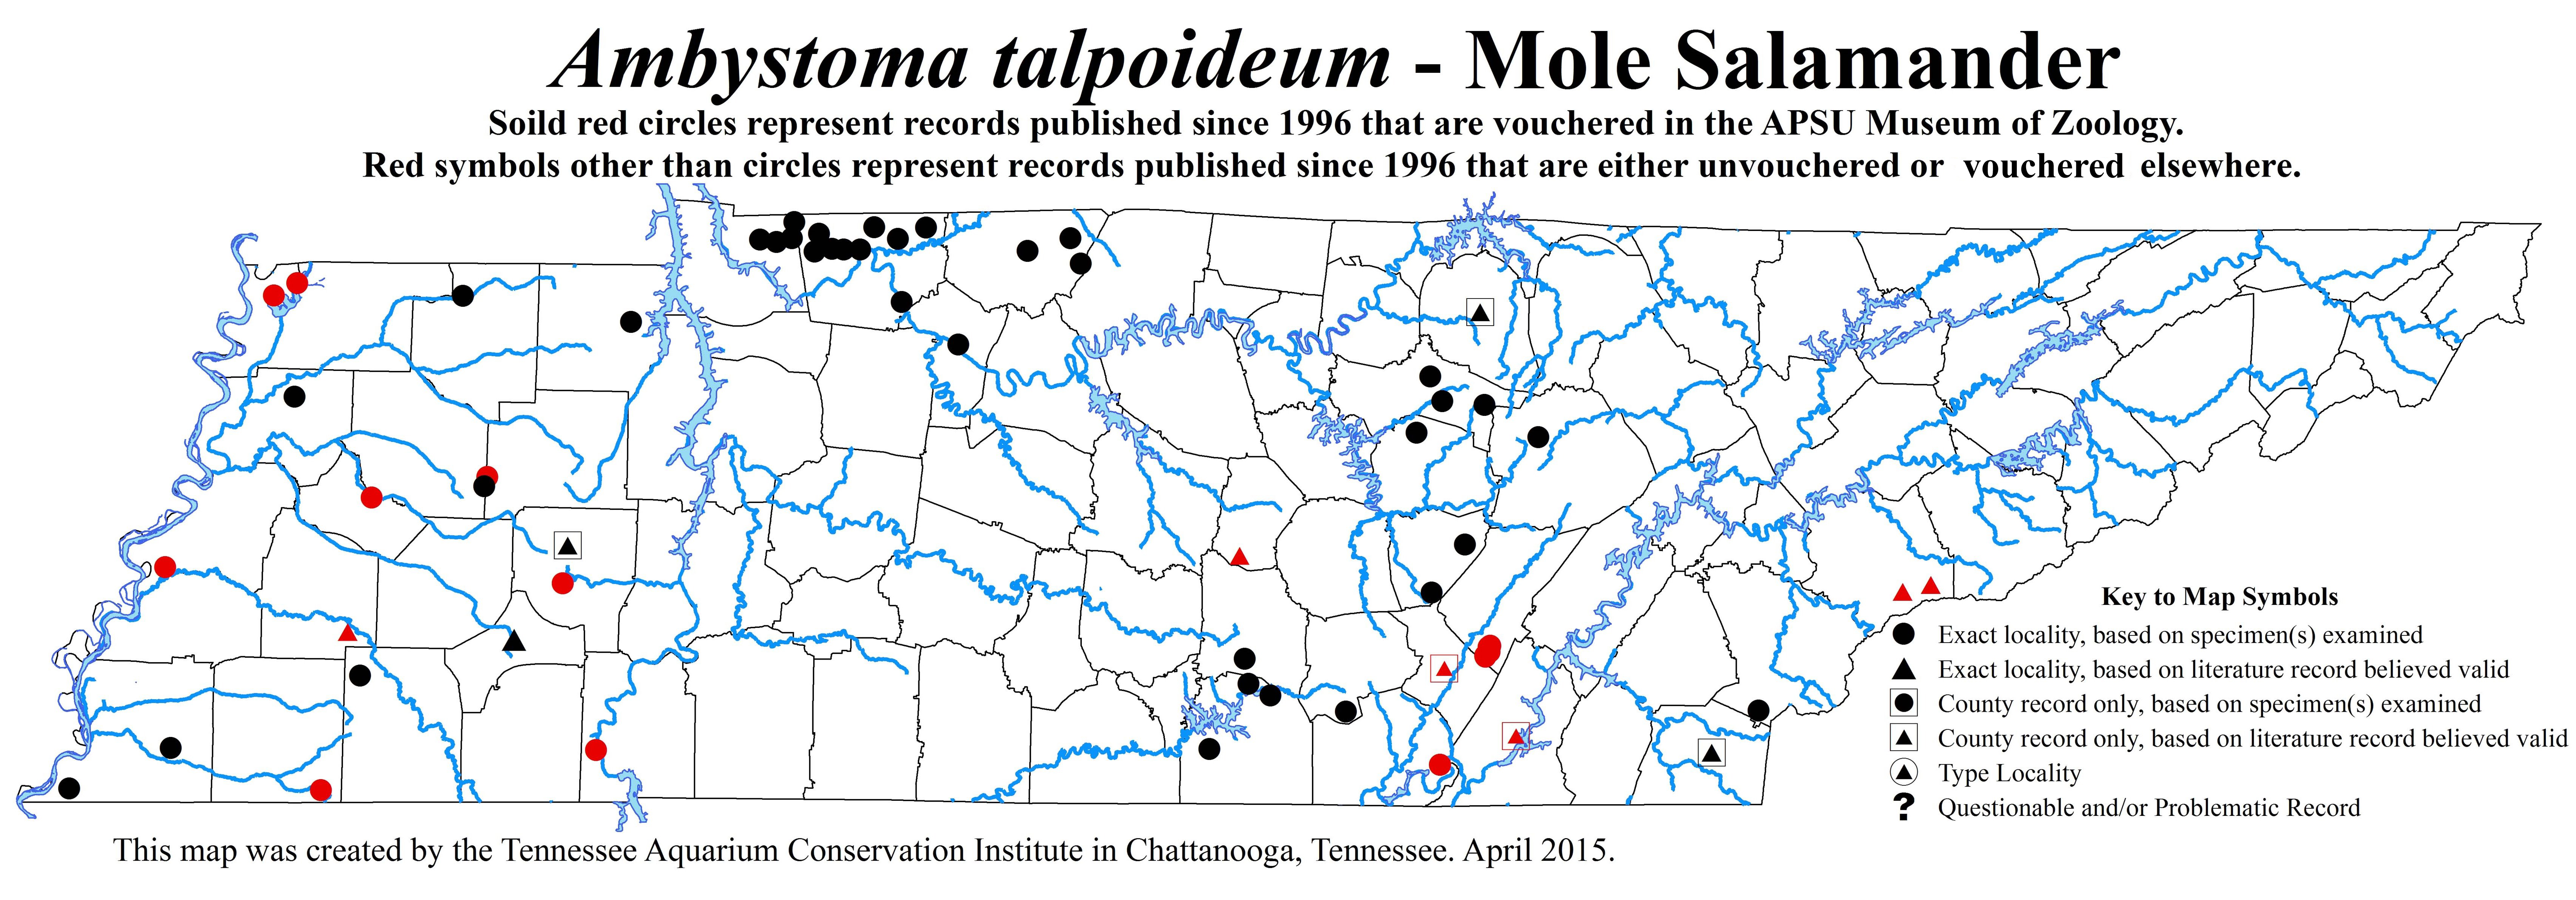 New Distribution Map - Ambystoma talpoideum (Holbrook) - Mole Salamander